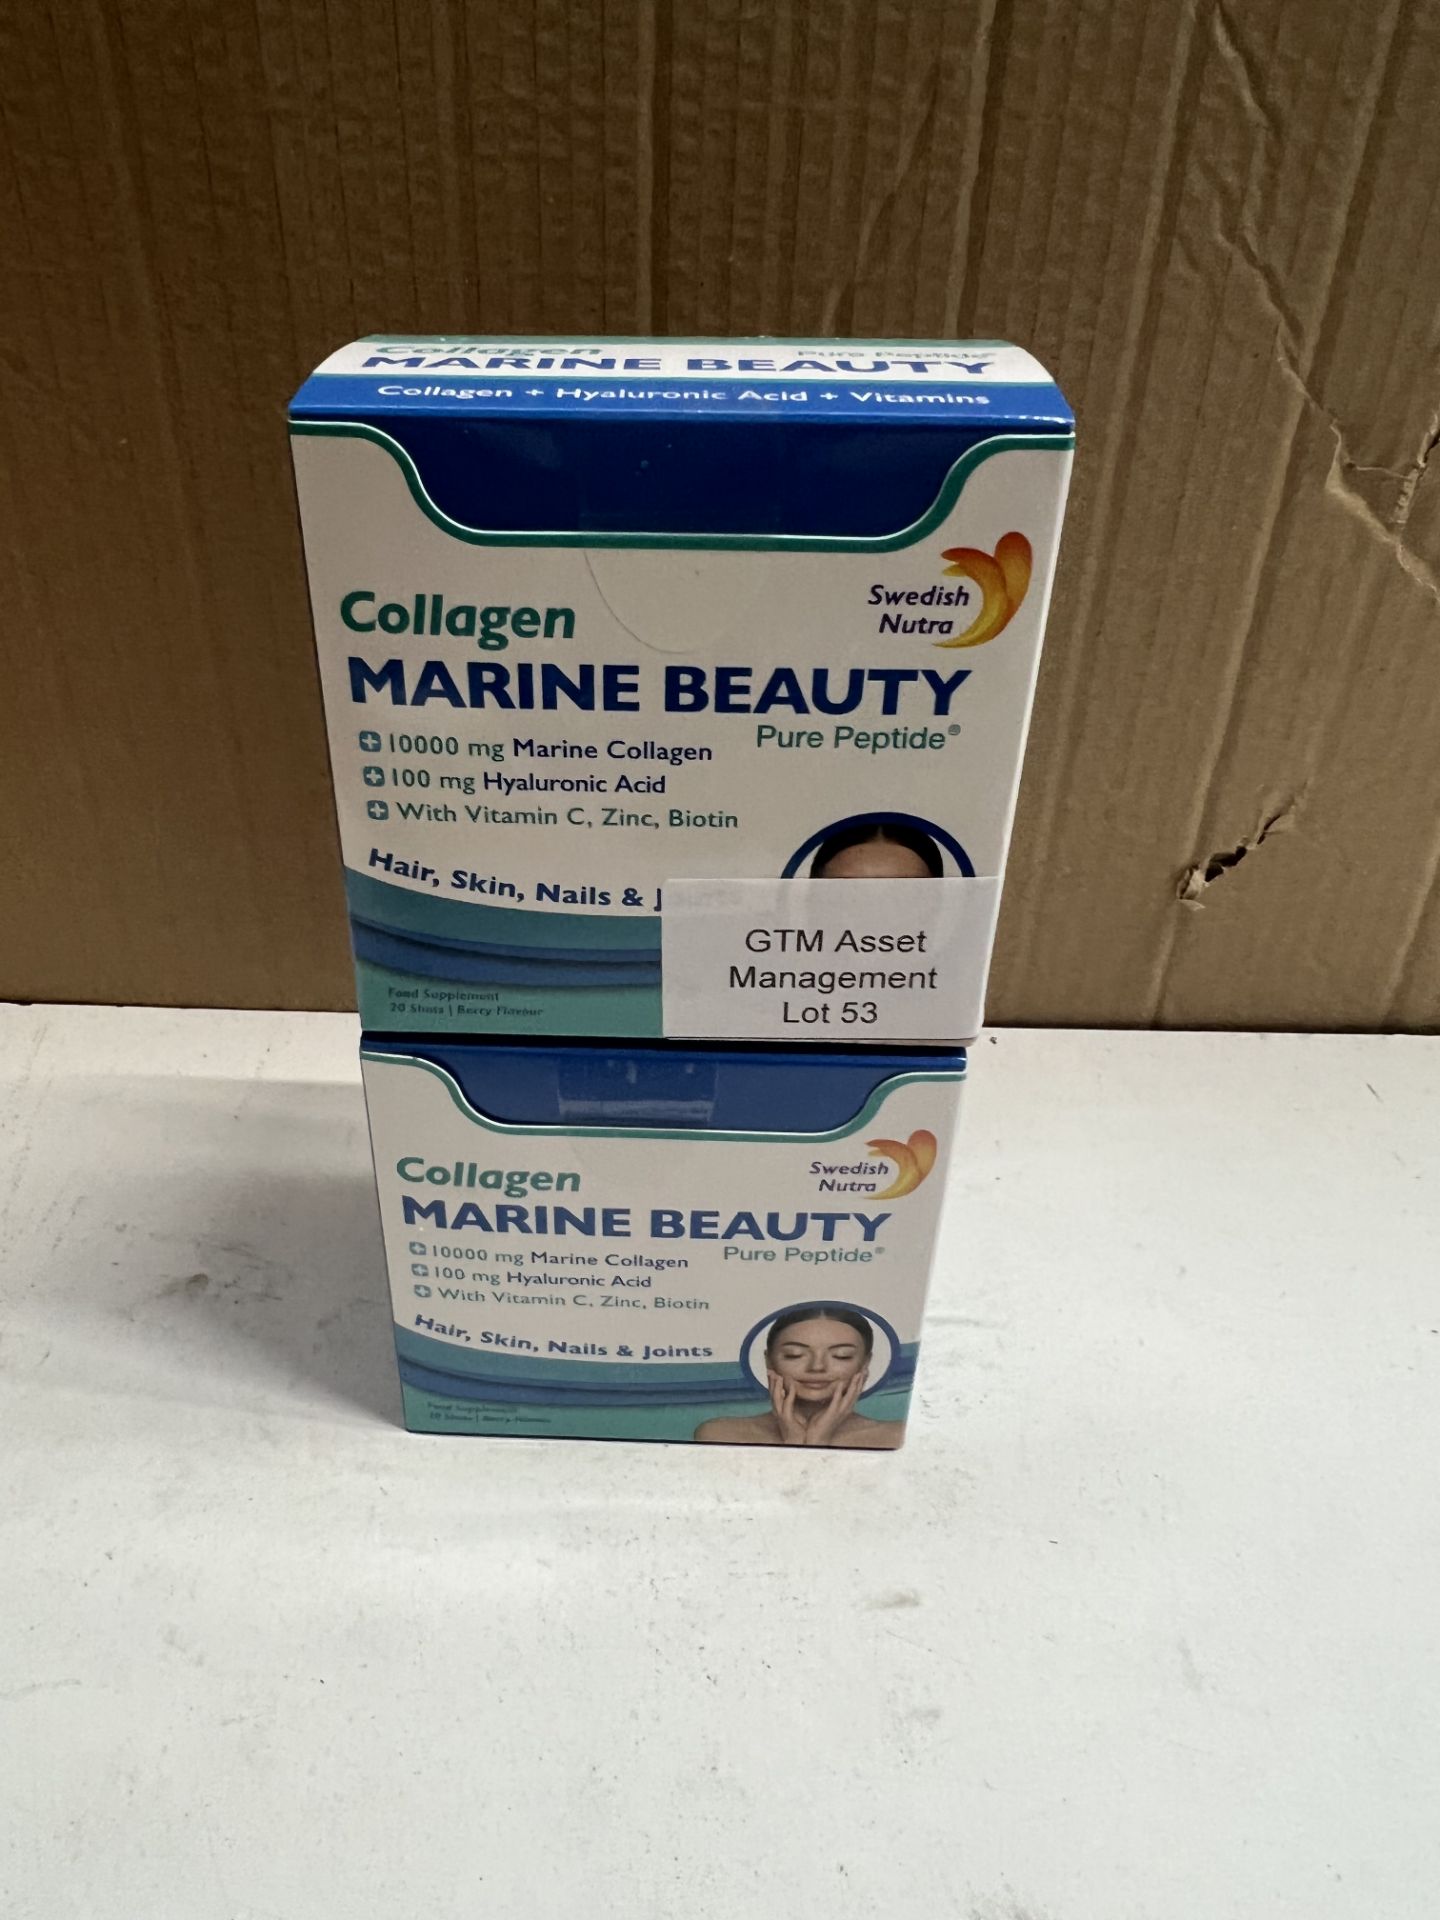 2 X Swedish Nutra Collagen Marine Beauty. RRP £44 - GRADE A